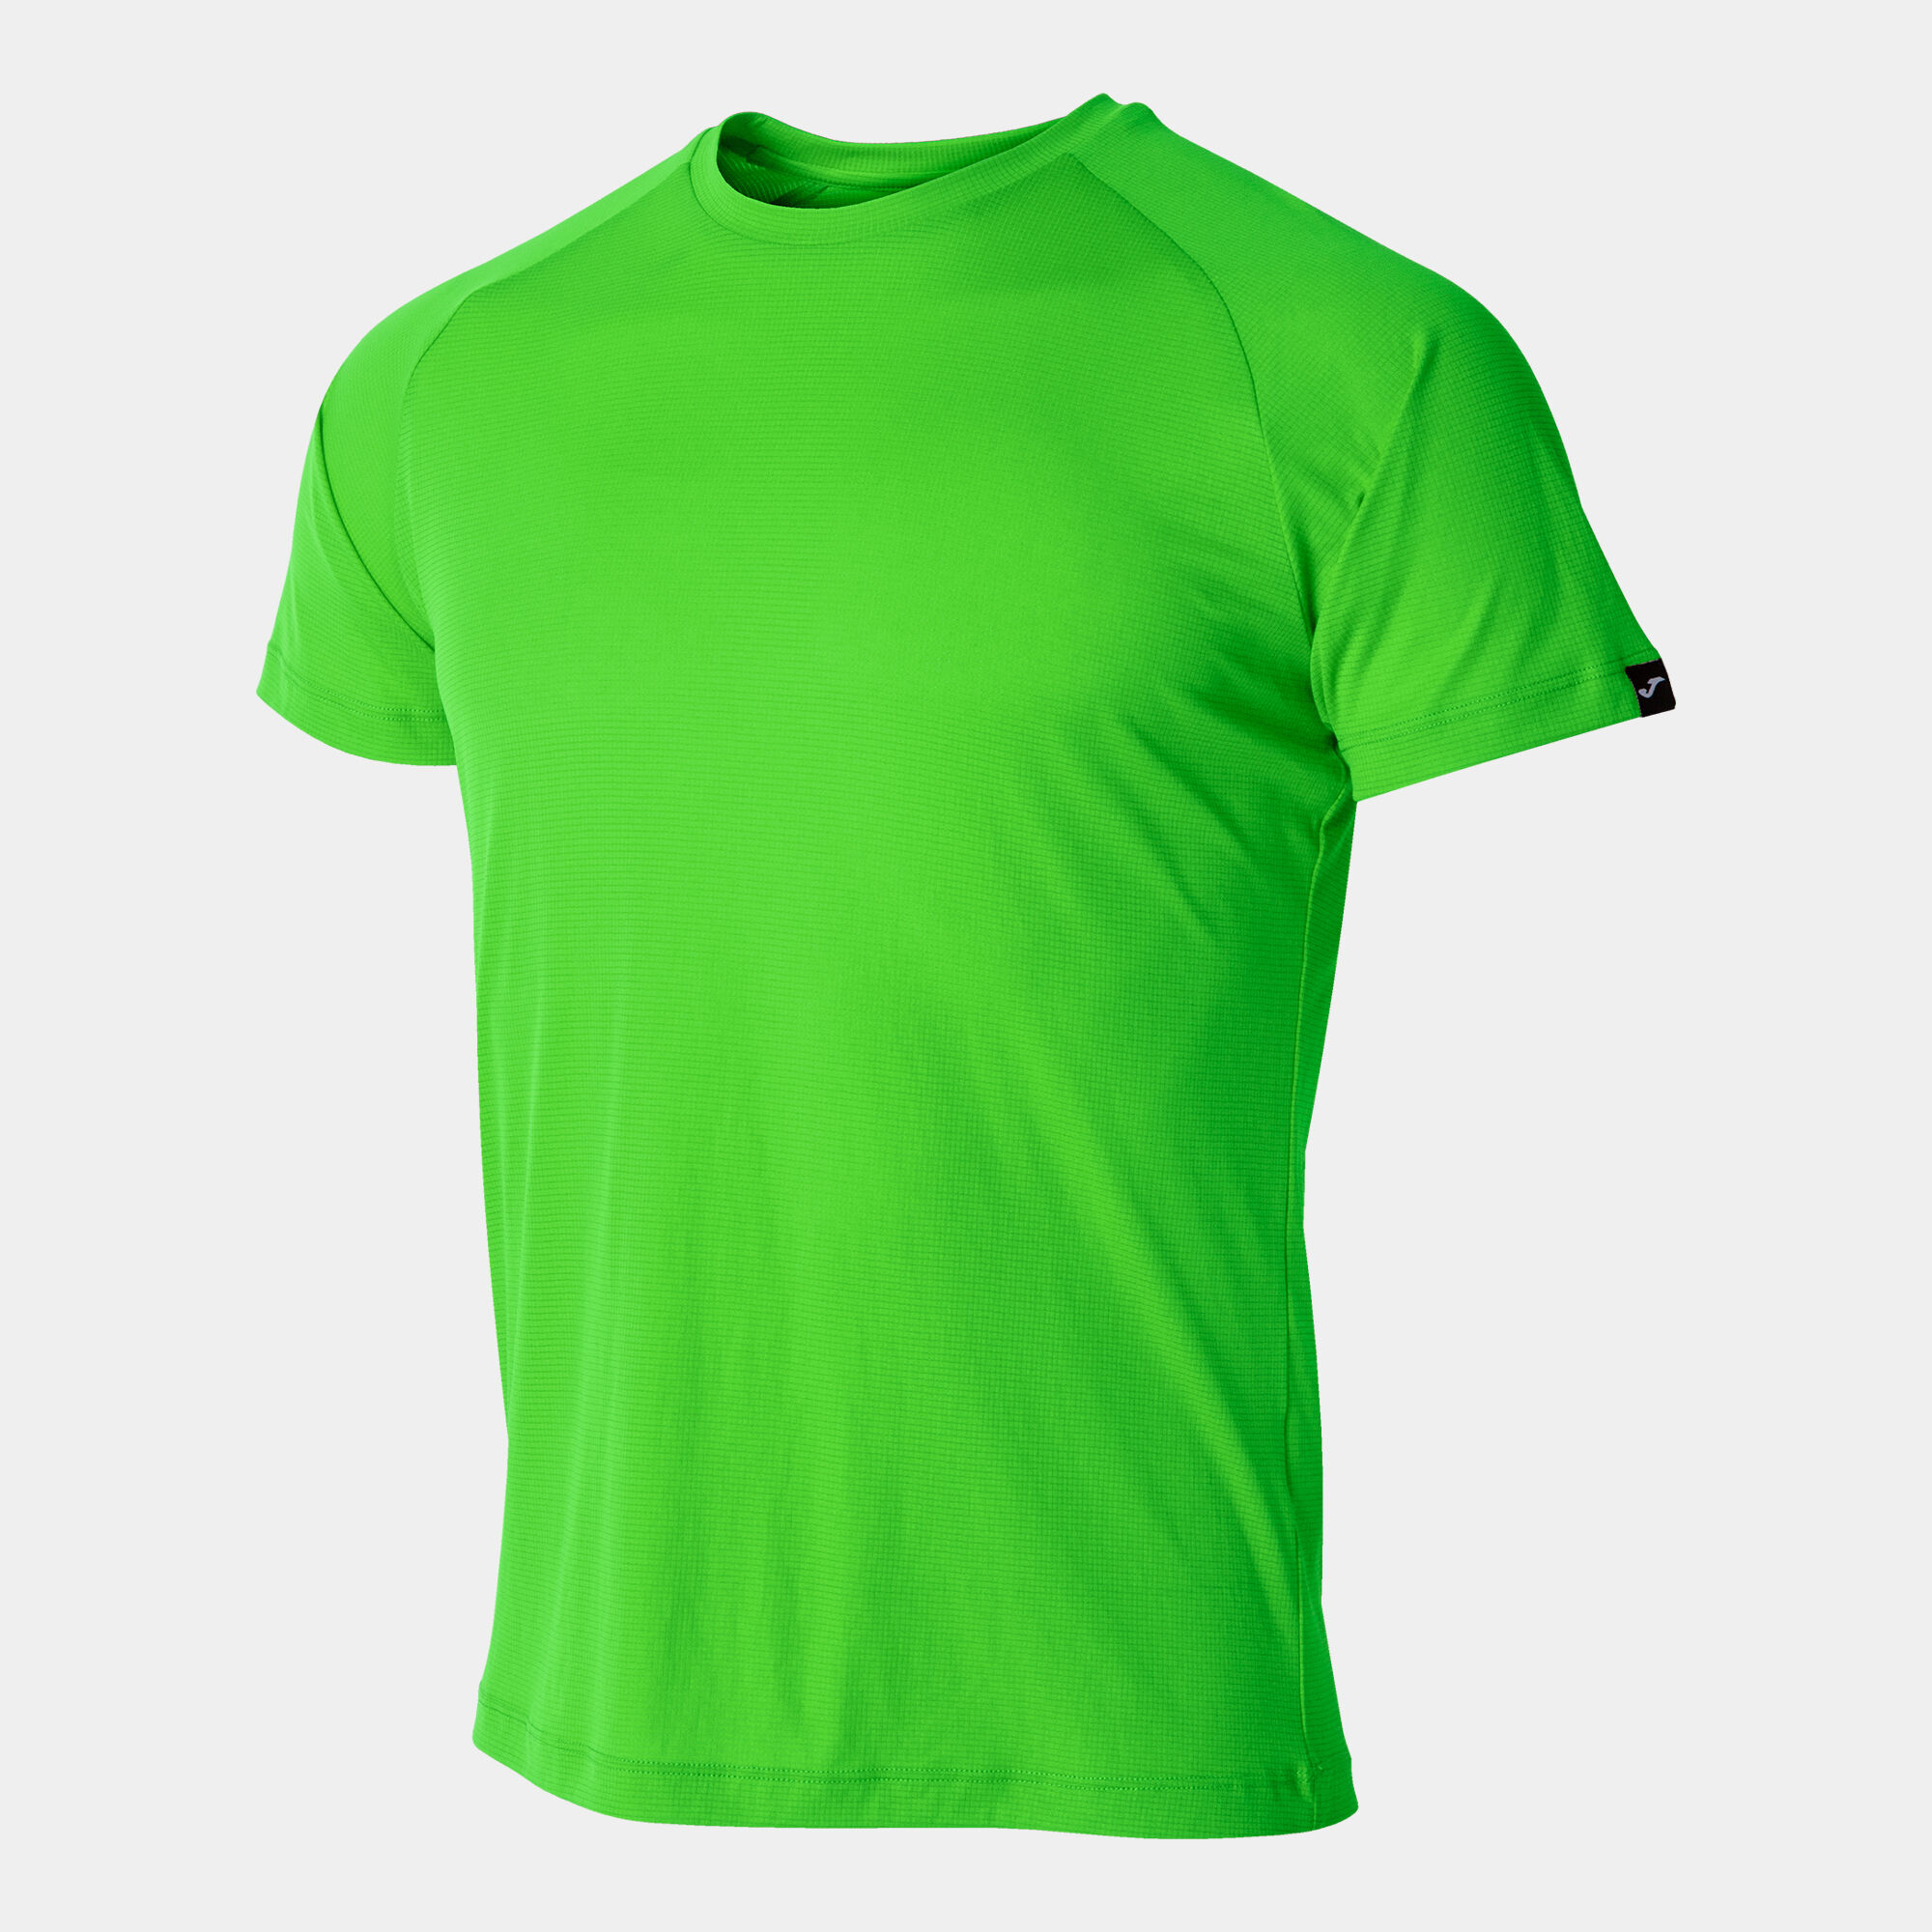 Camiseta manga corta hombre R-Combi verde flúor